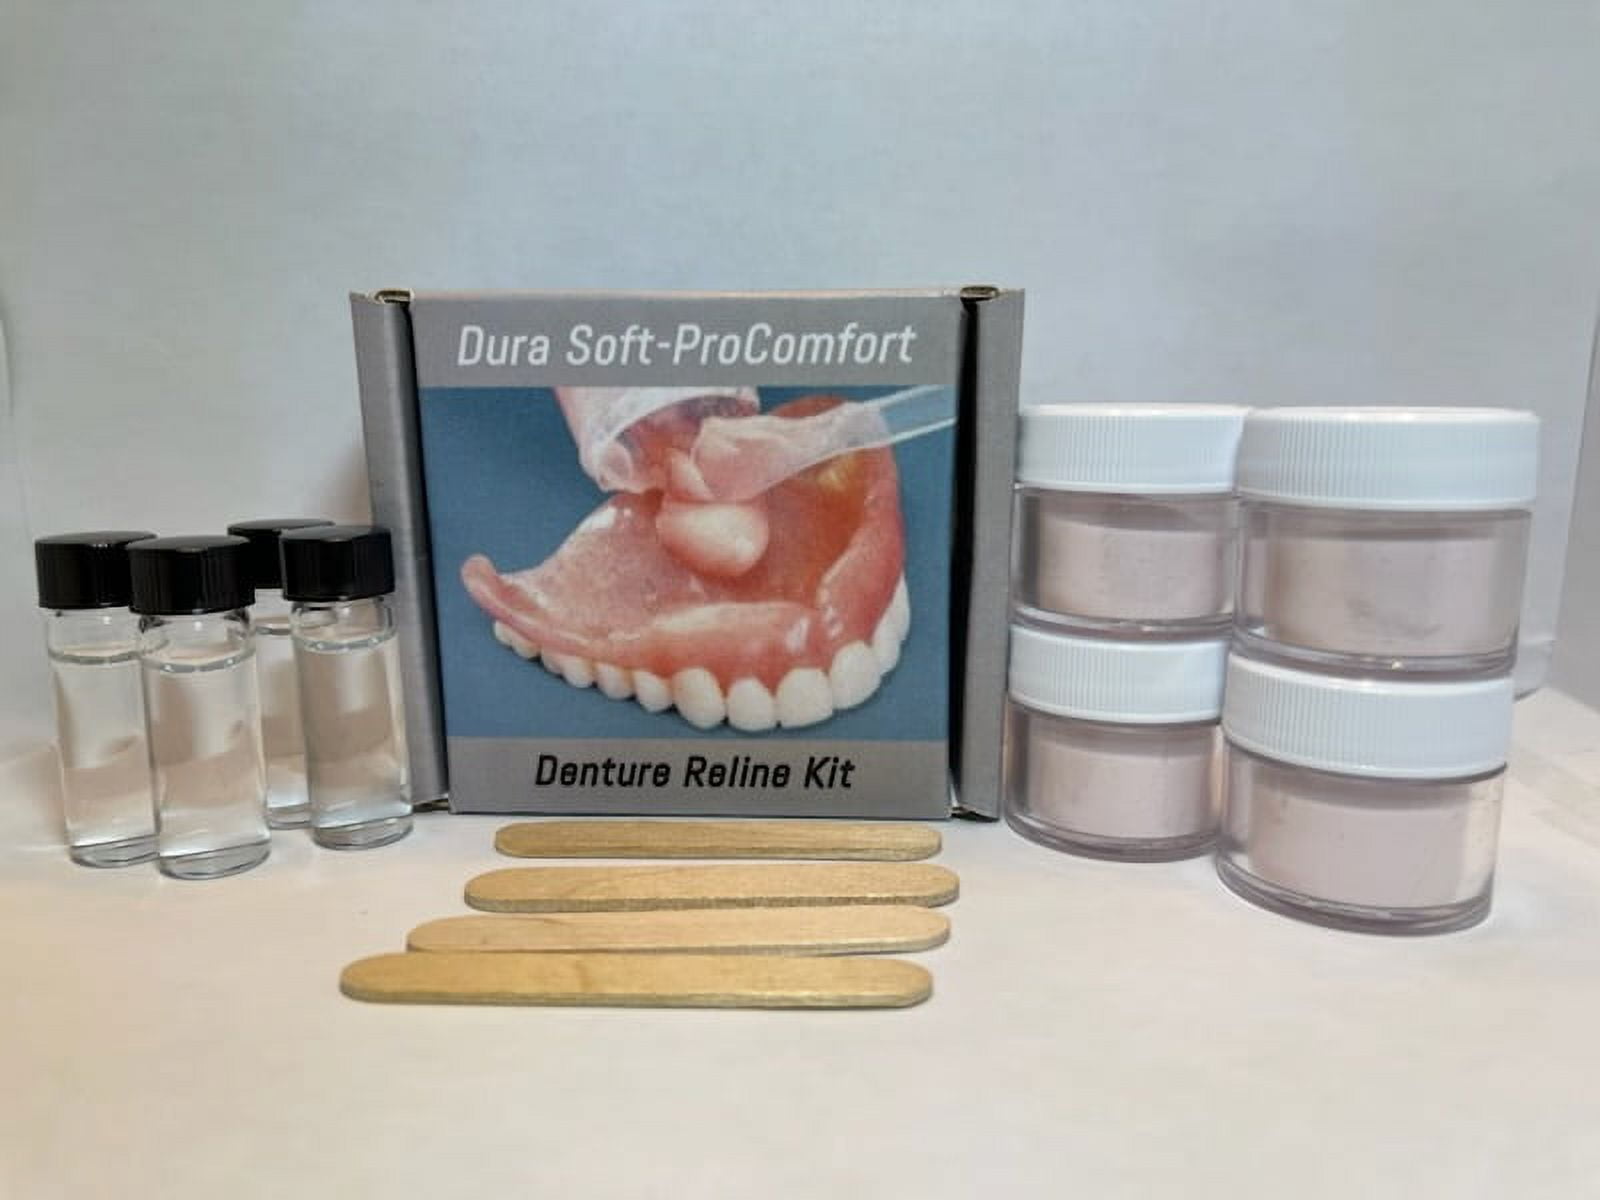 DenSureFit Lower Denture Soft Reline Kit